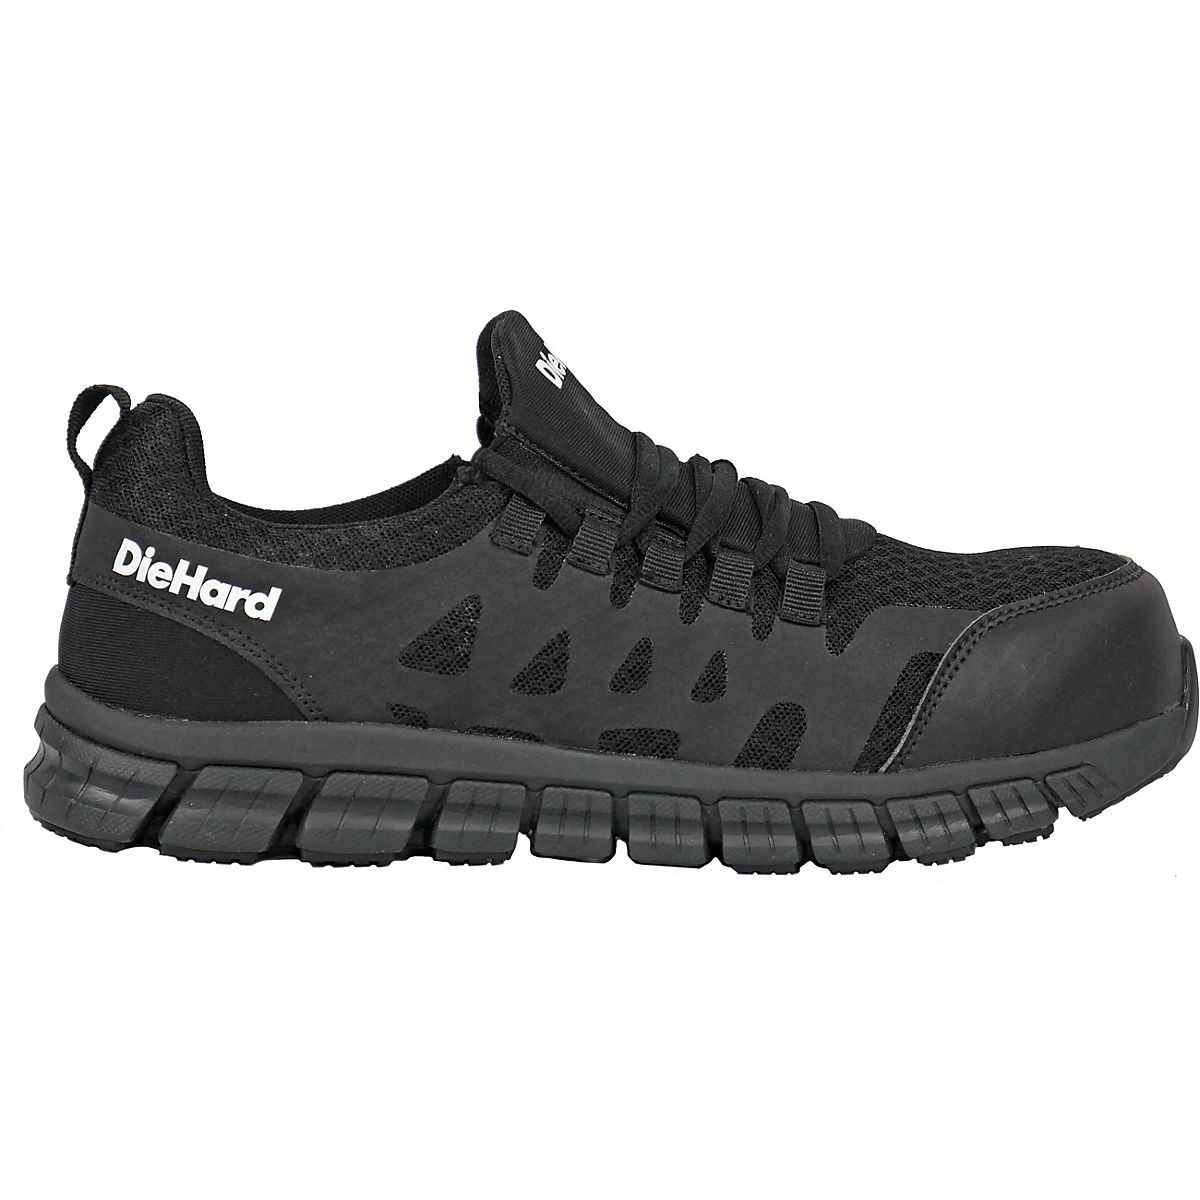 DieHard Footwear Men's Bonneville Composite Safety Toe Athletic Work ...